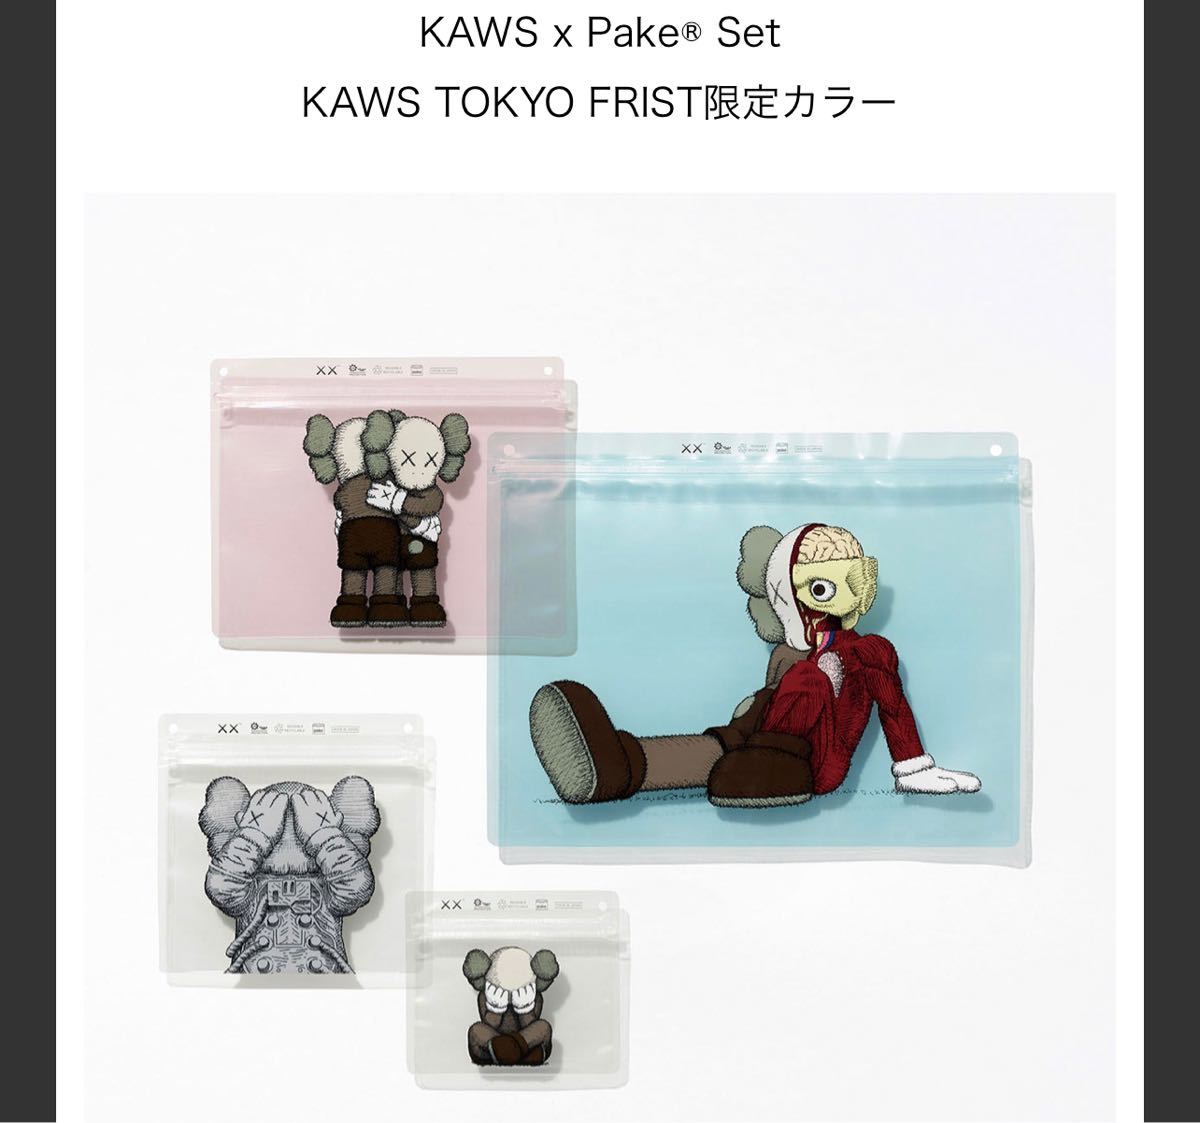 KAWS TOKYO FIRST カウズトウキョーファースト会場販売限定 KAWSクリア